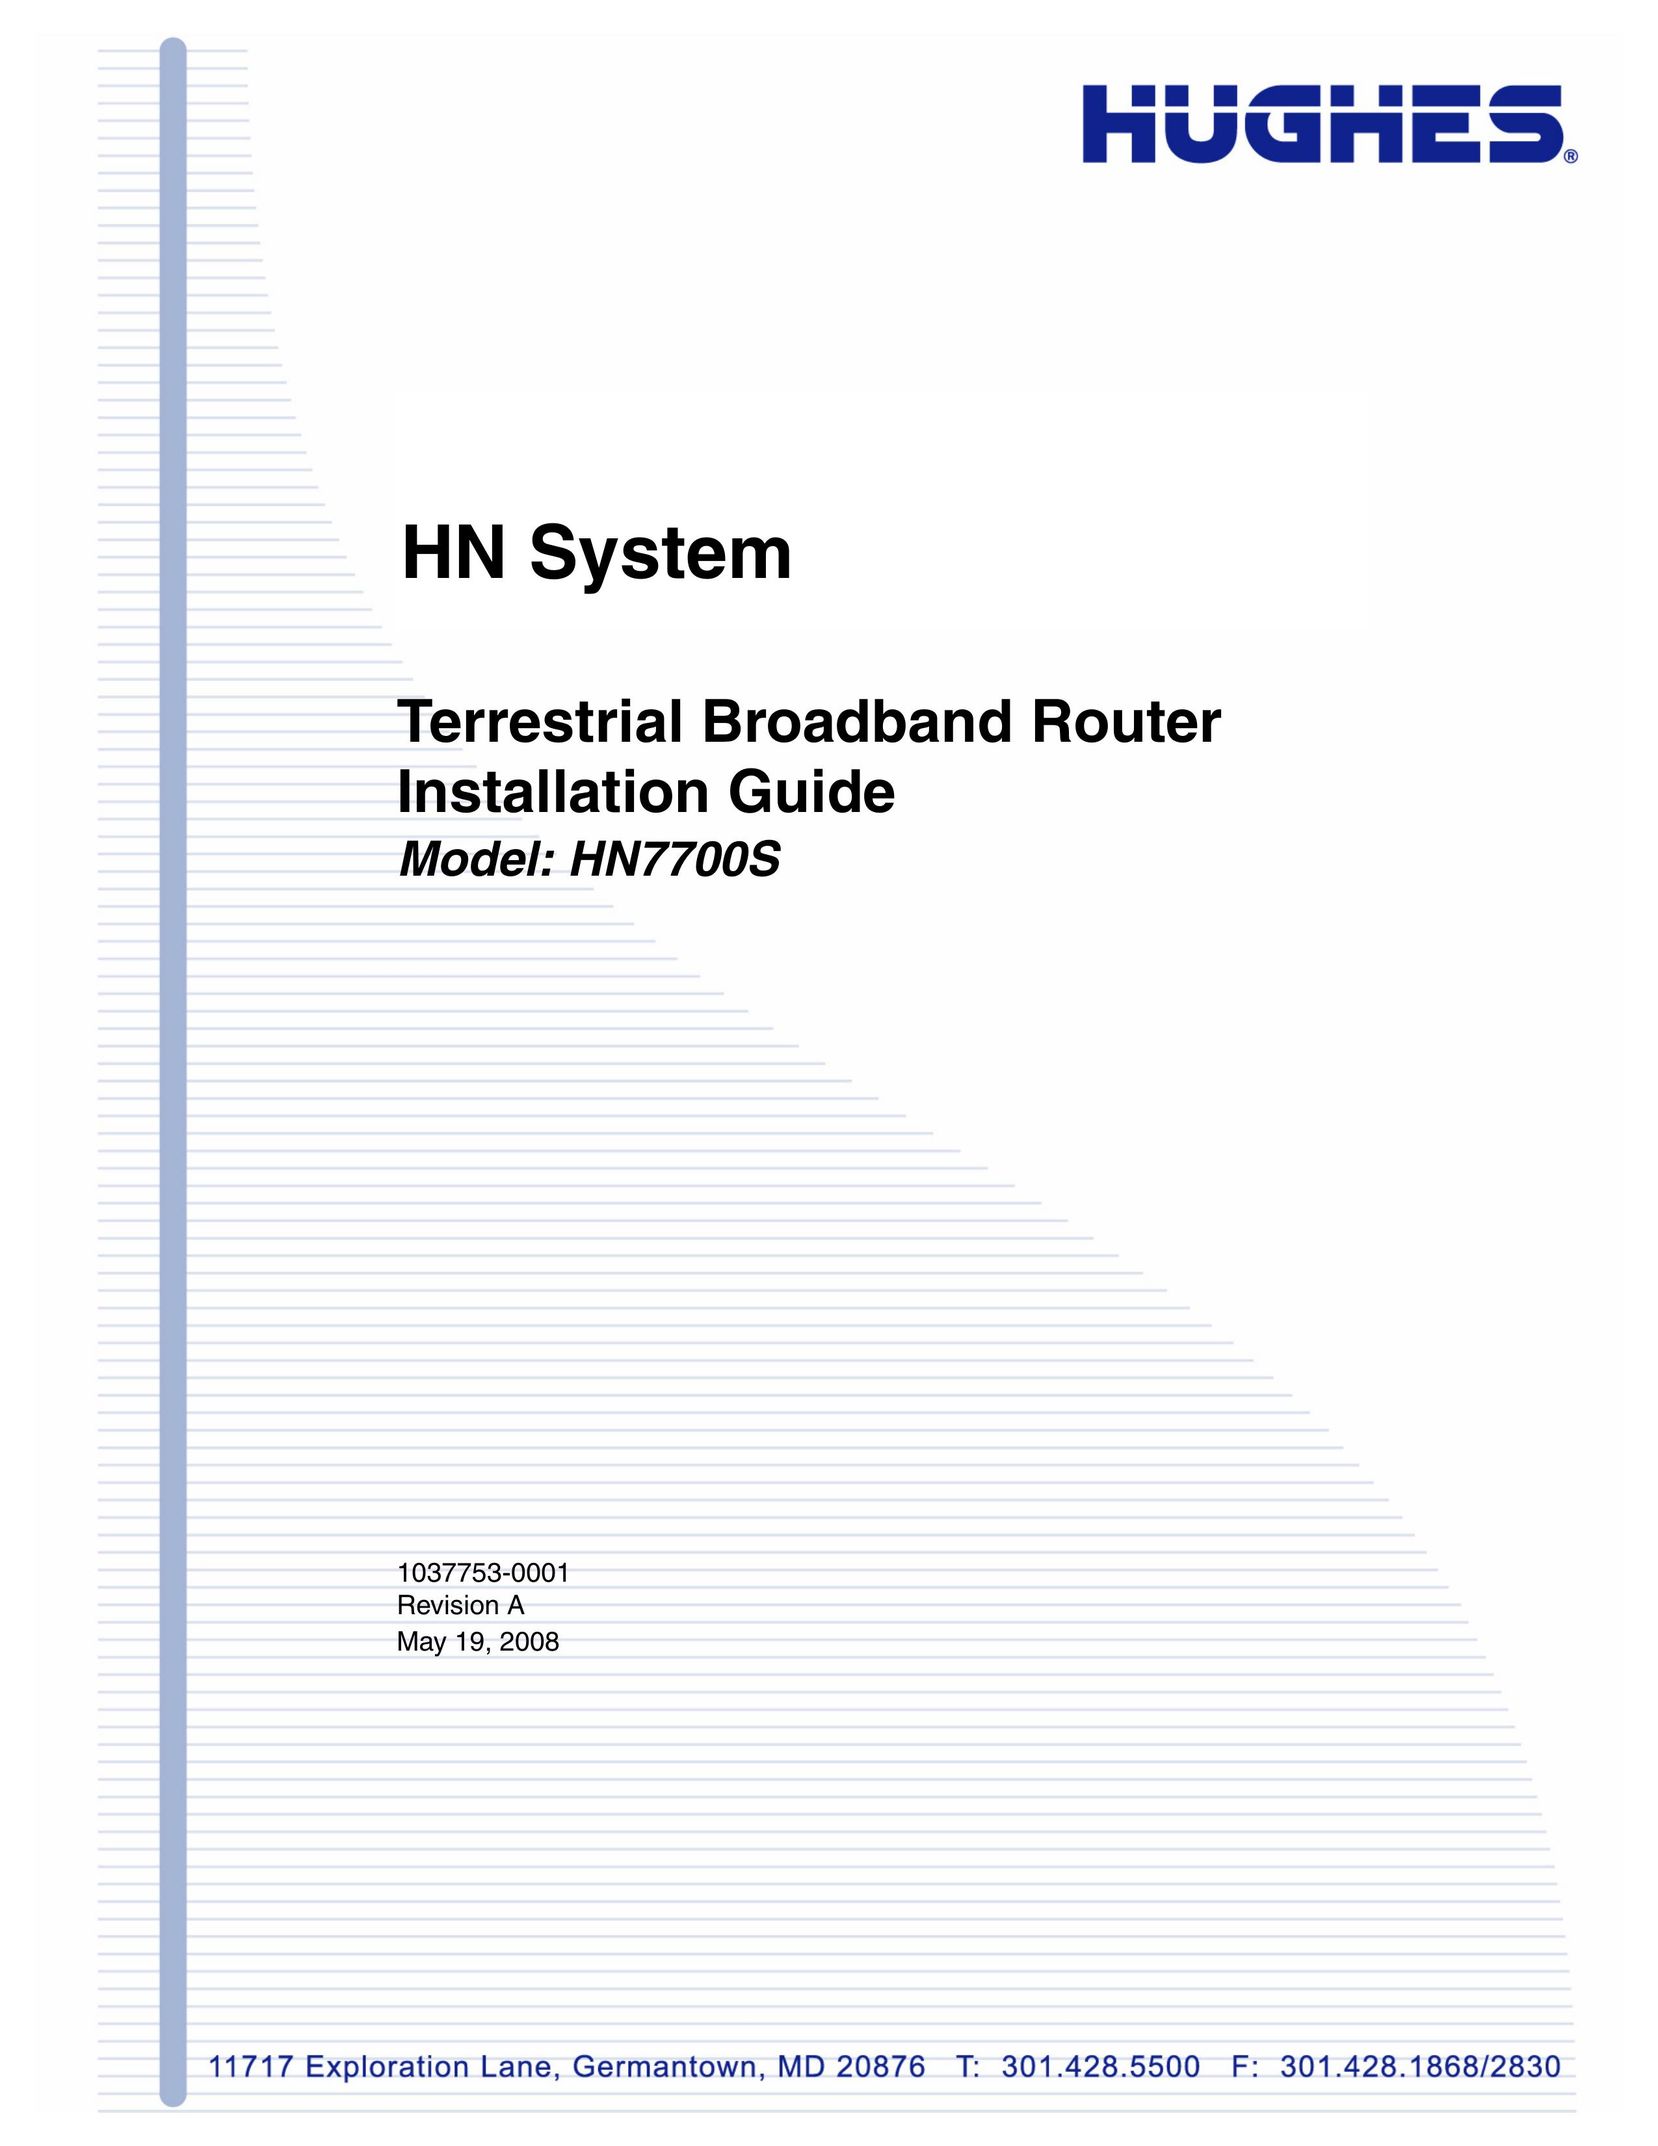 Hughes HN7700S Network Router User Manual